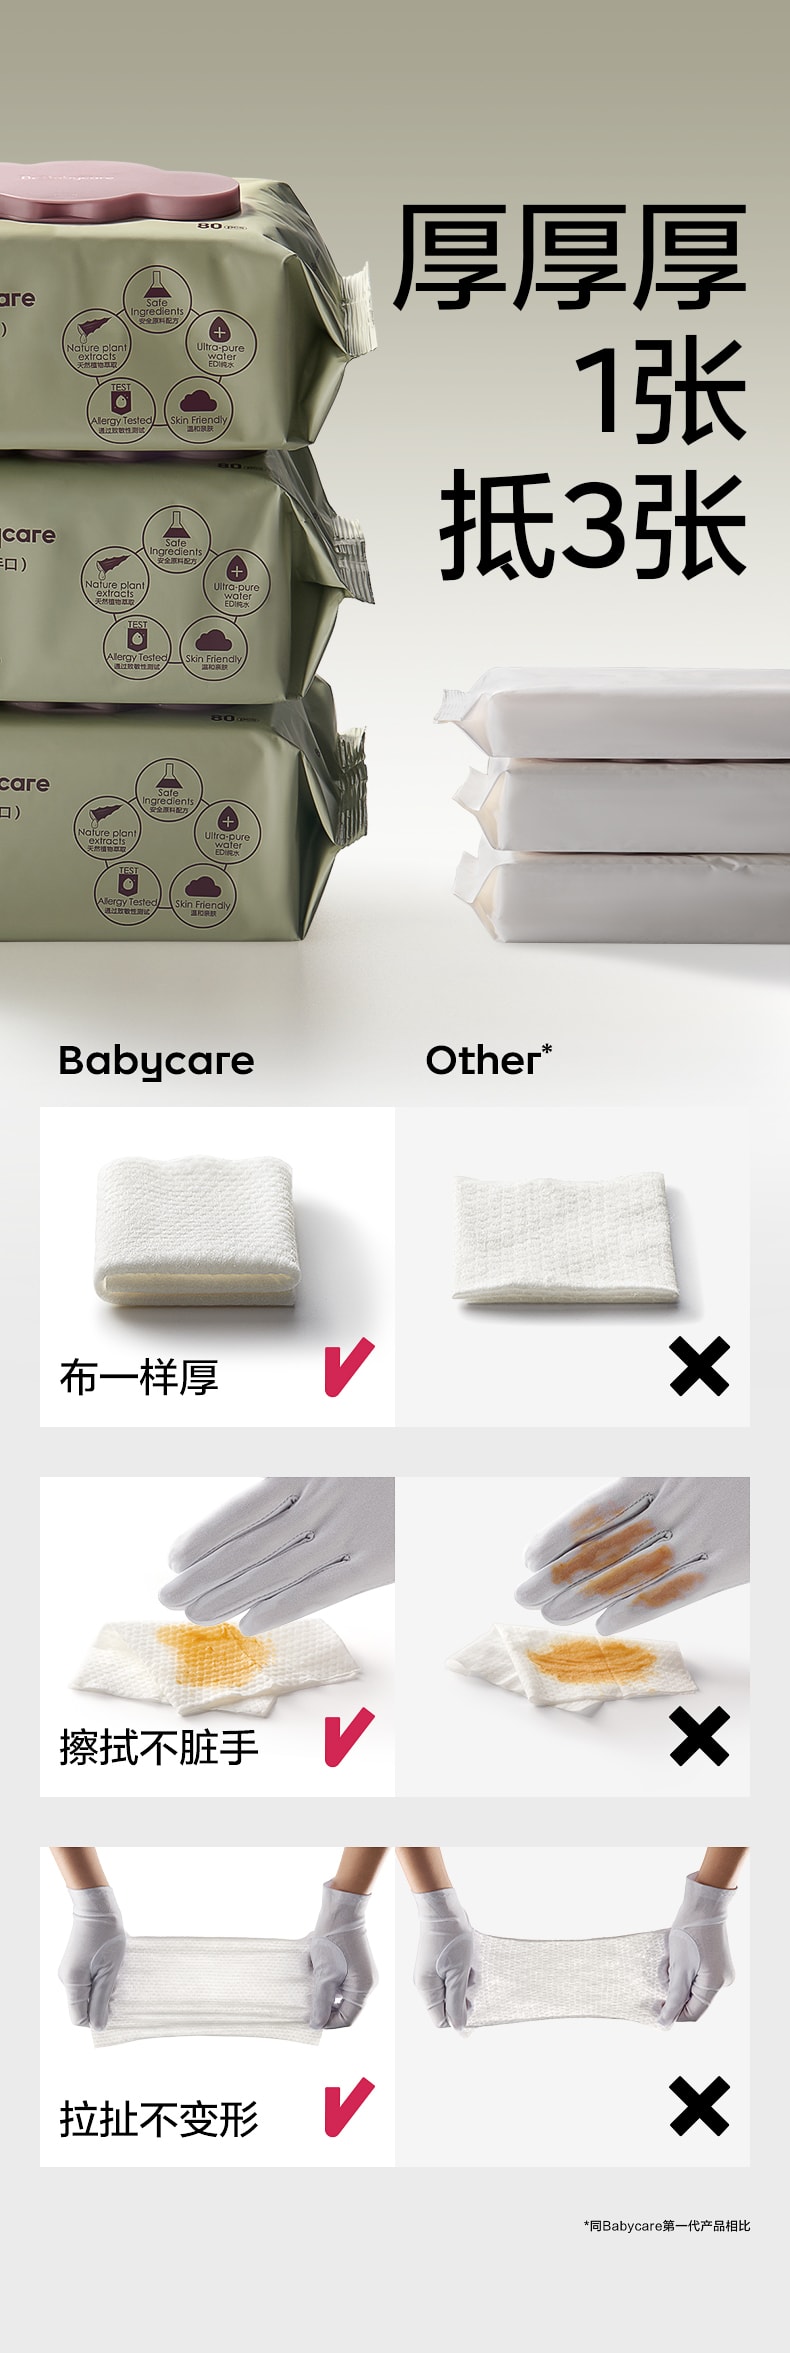 【中国直邮】Bc Babycare 婴幼儿手口湿巾 200mm*150mm-80抽/包